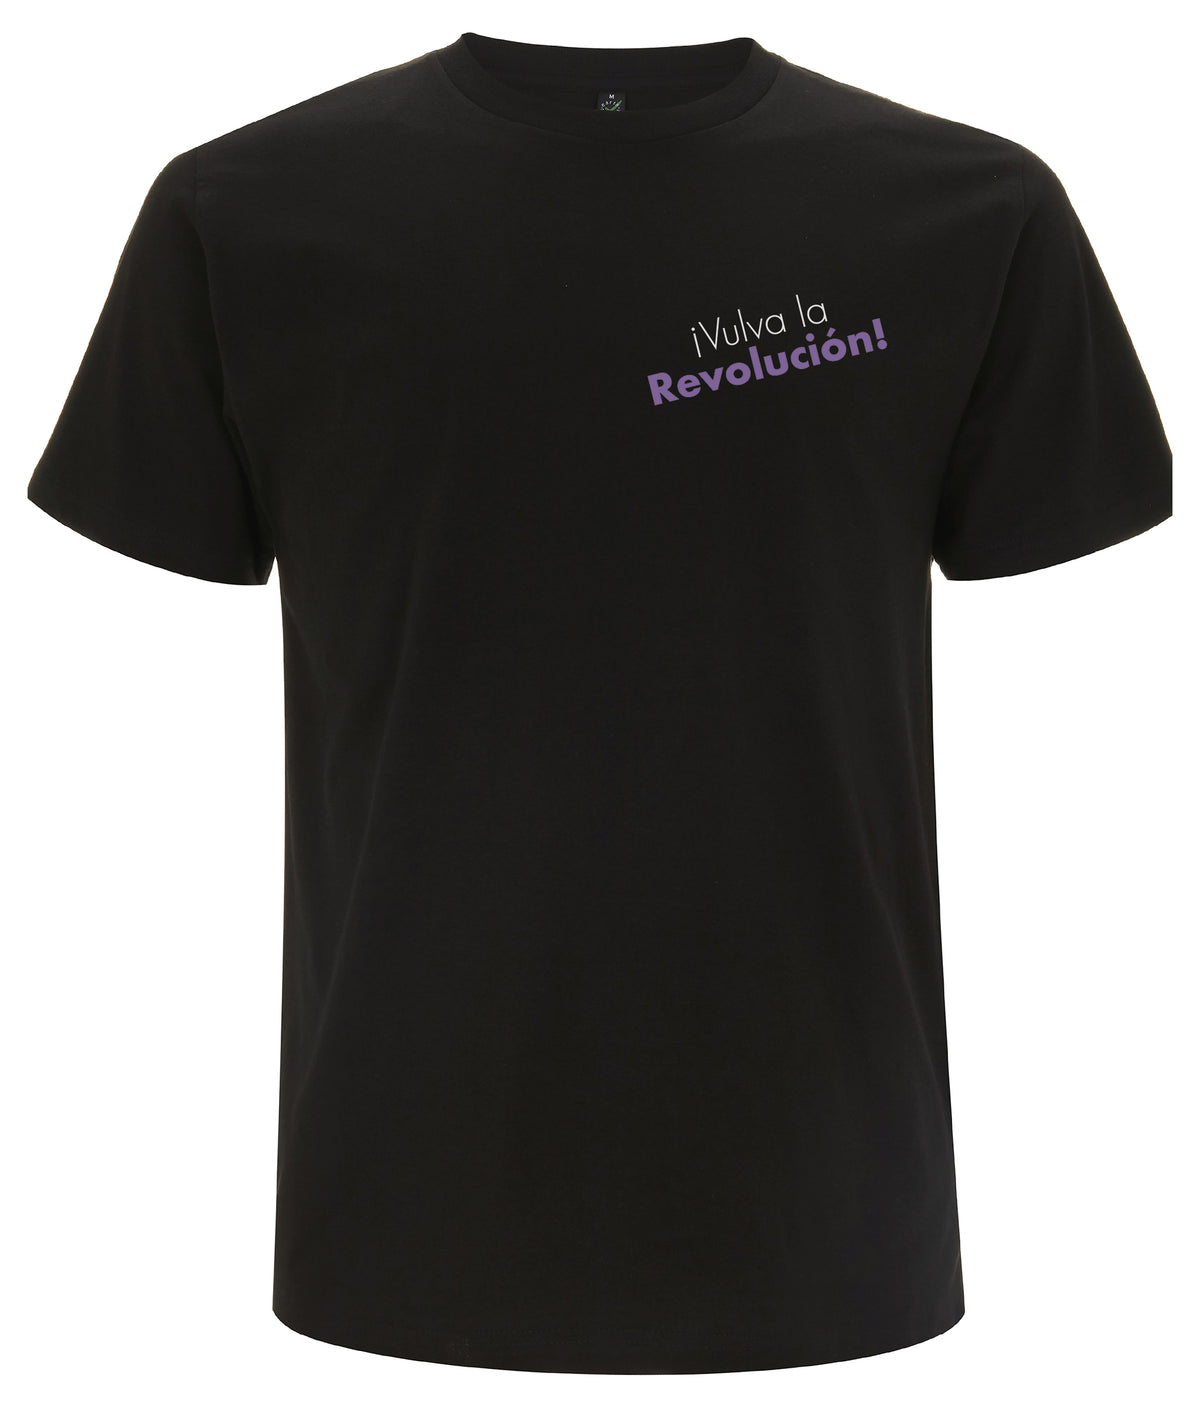 Vulva La Revolucion Organic Feminist T Shirt Black